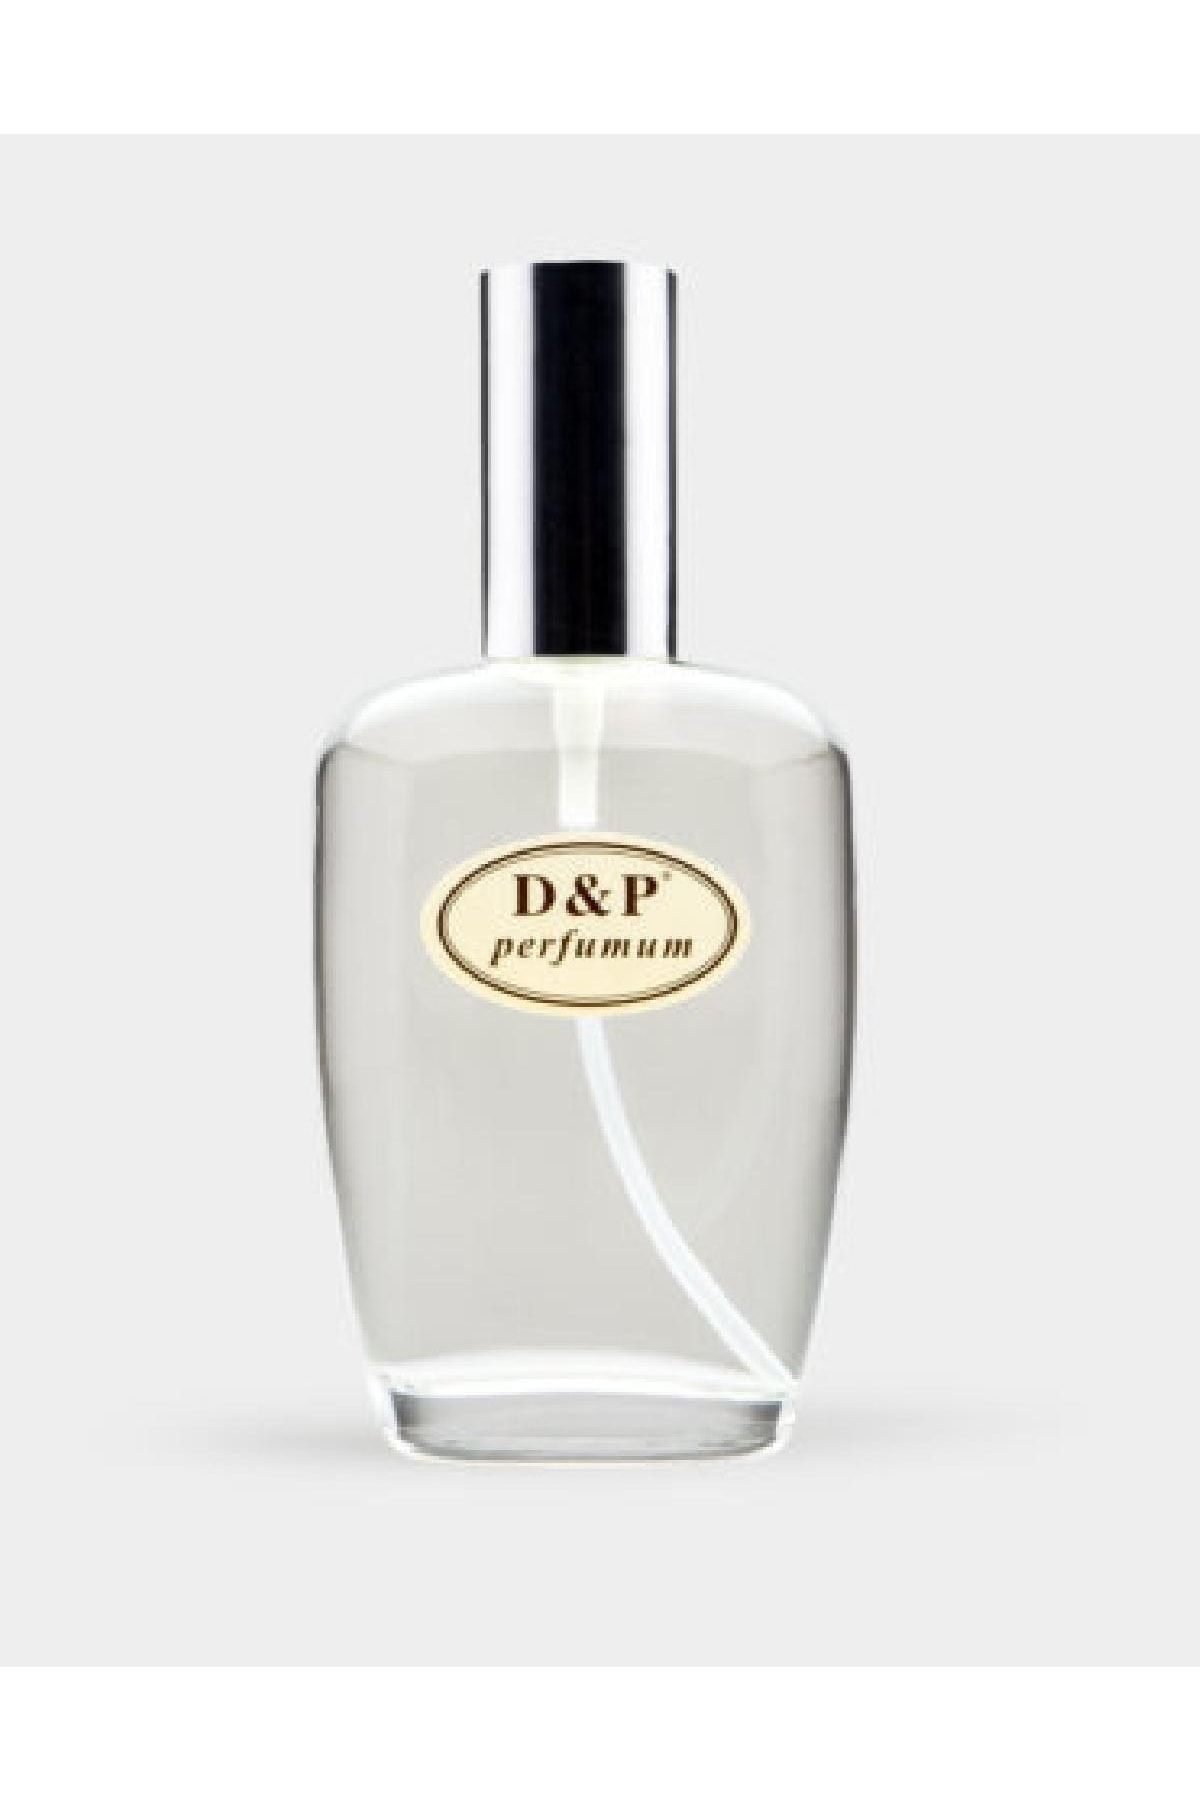 D&P Perfumum C20 Kadın Parfüm Edp 50 ml